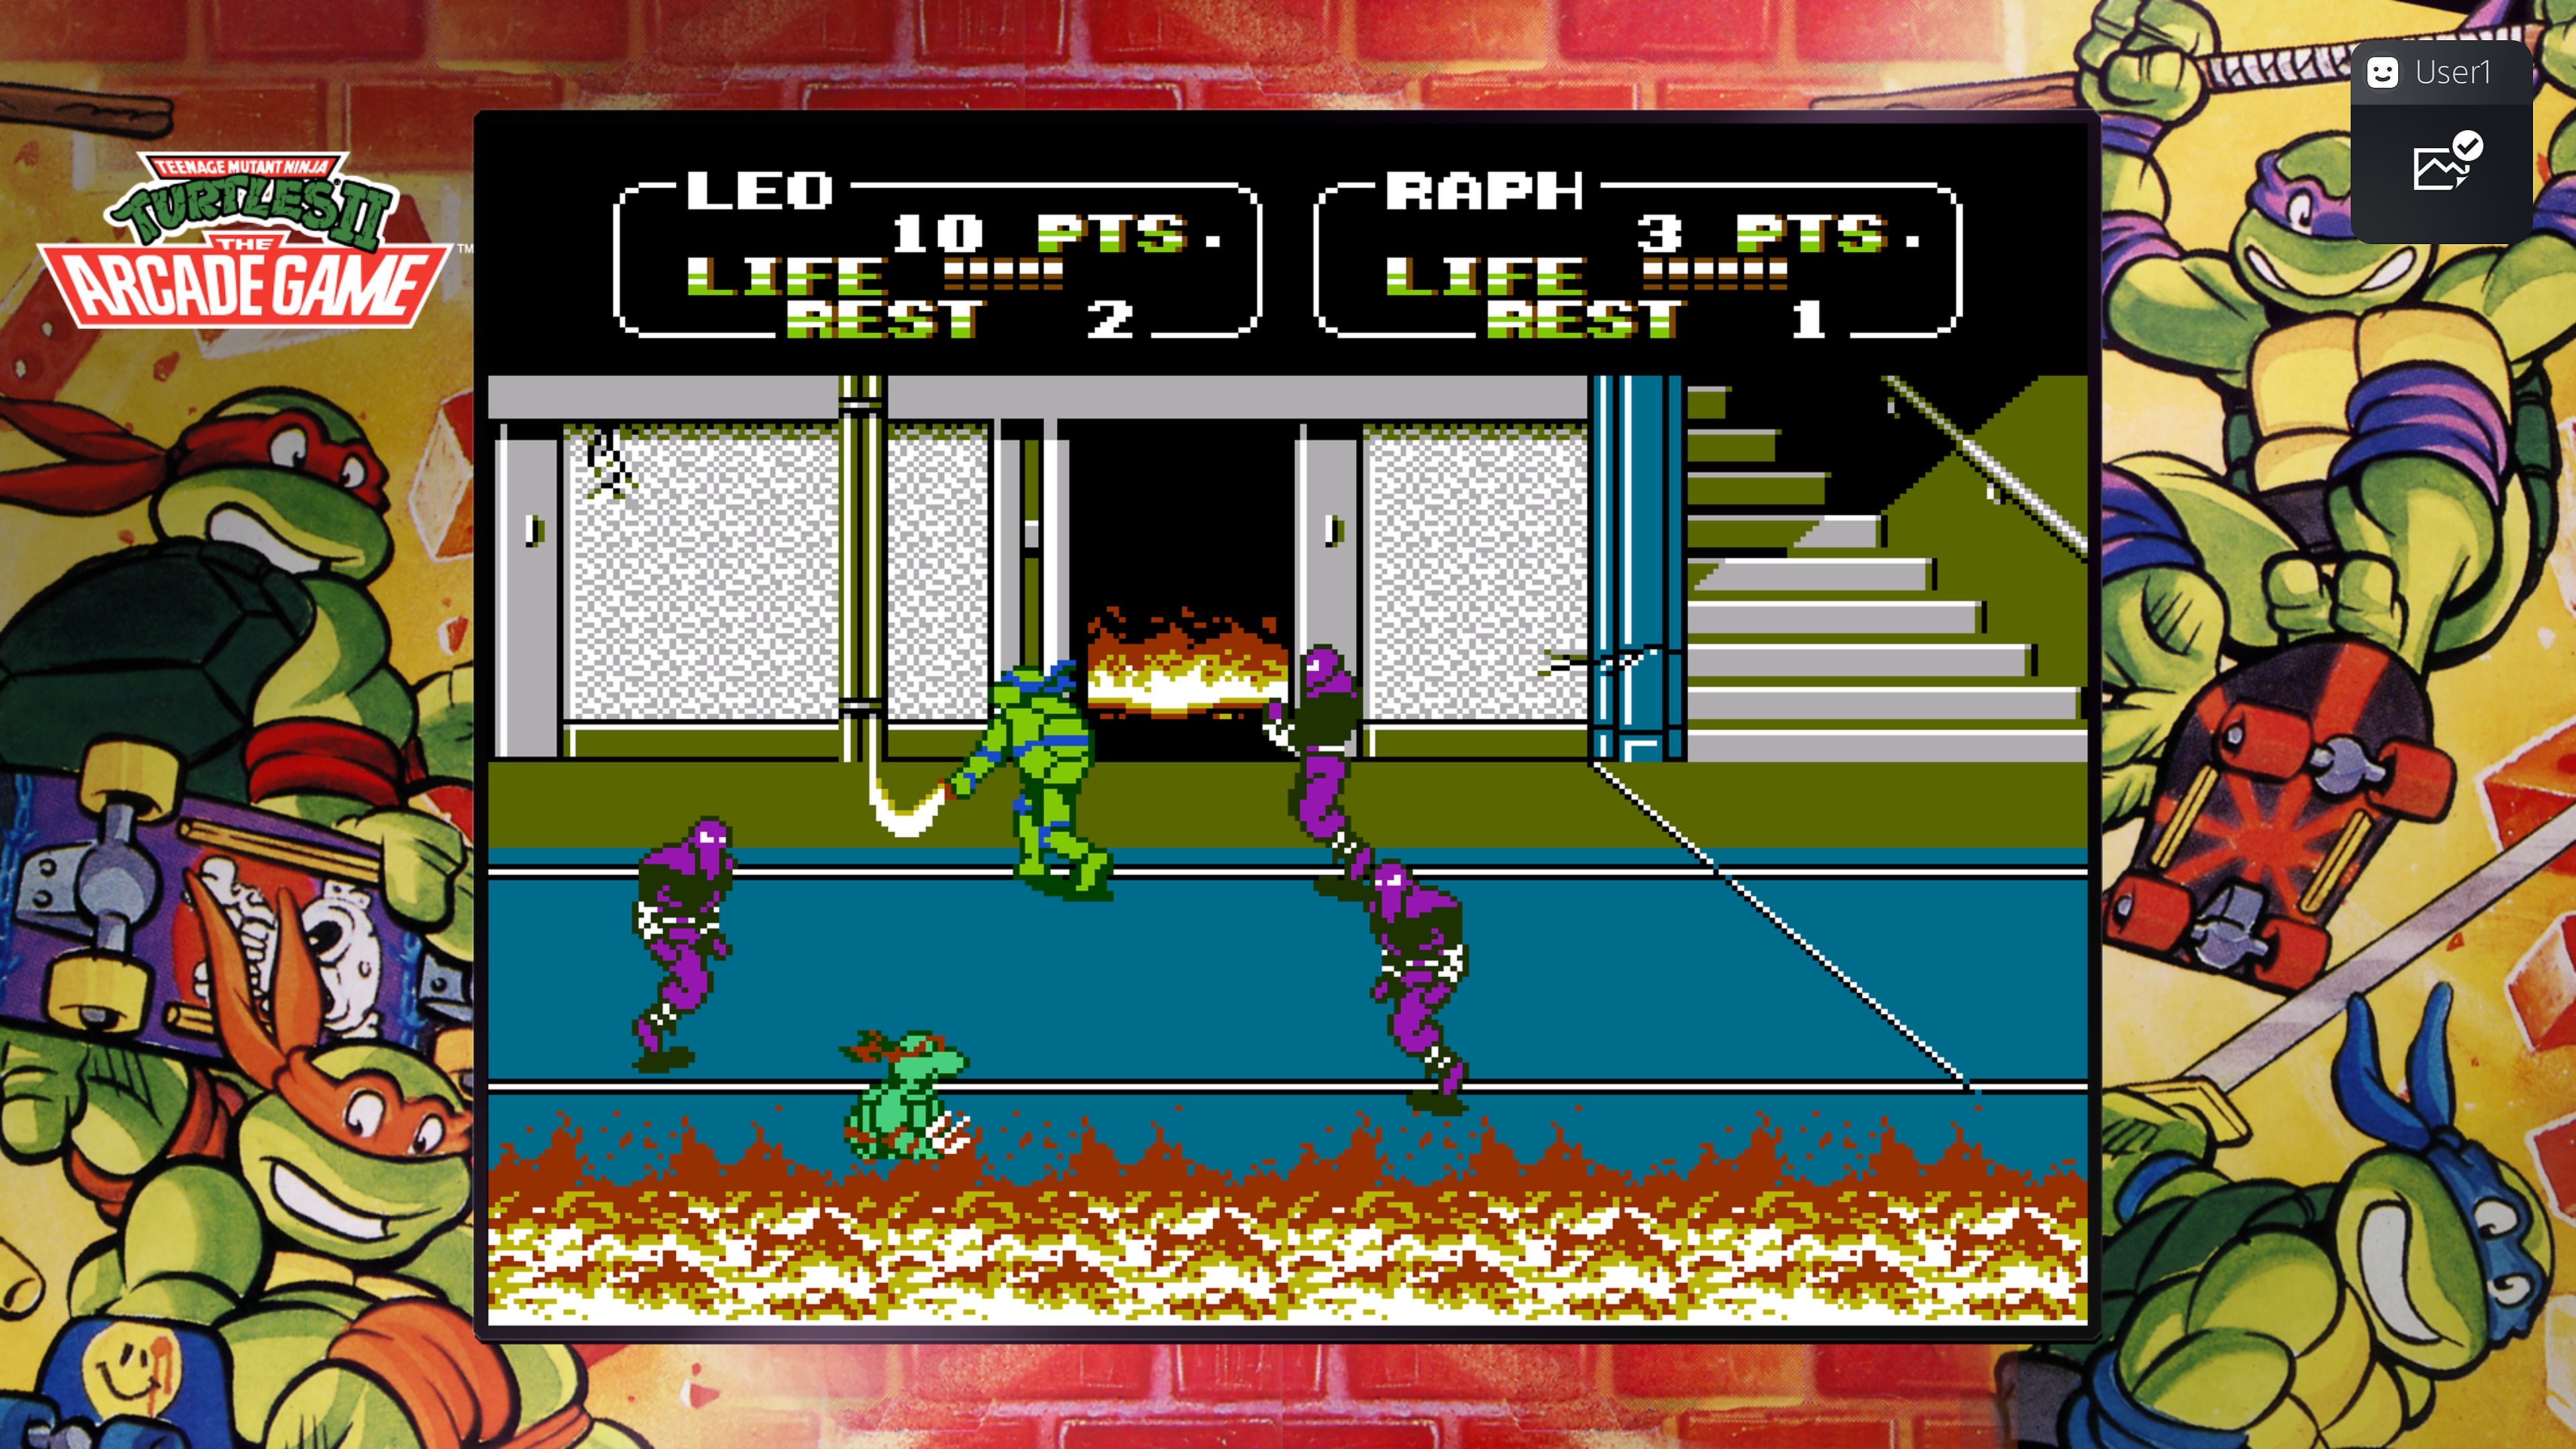 Teenage Mutant Ninja Turtles Collection - The Arcade Game screenshot showing Leonardo and Raphael fighting the Foot Clan